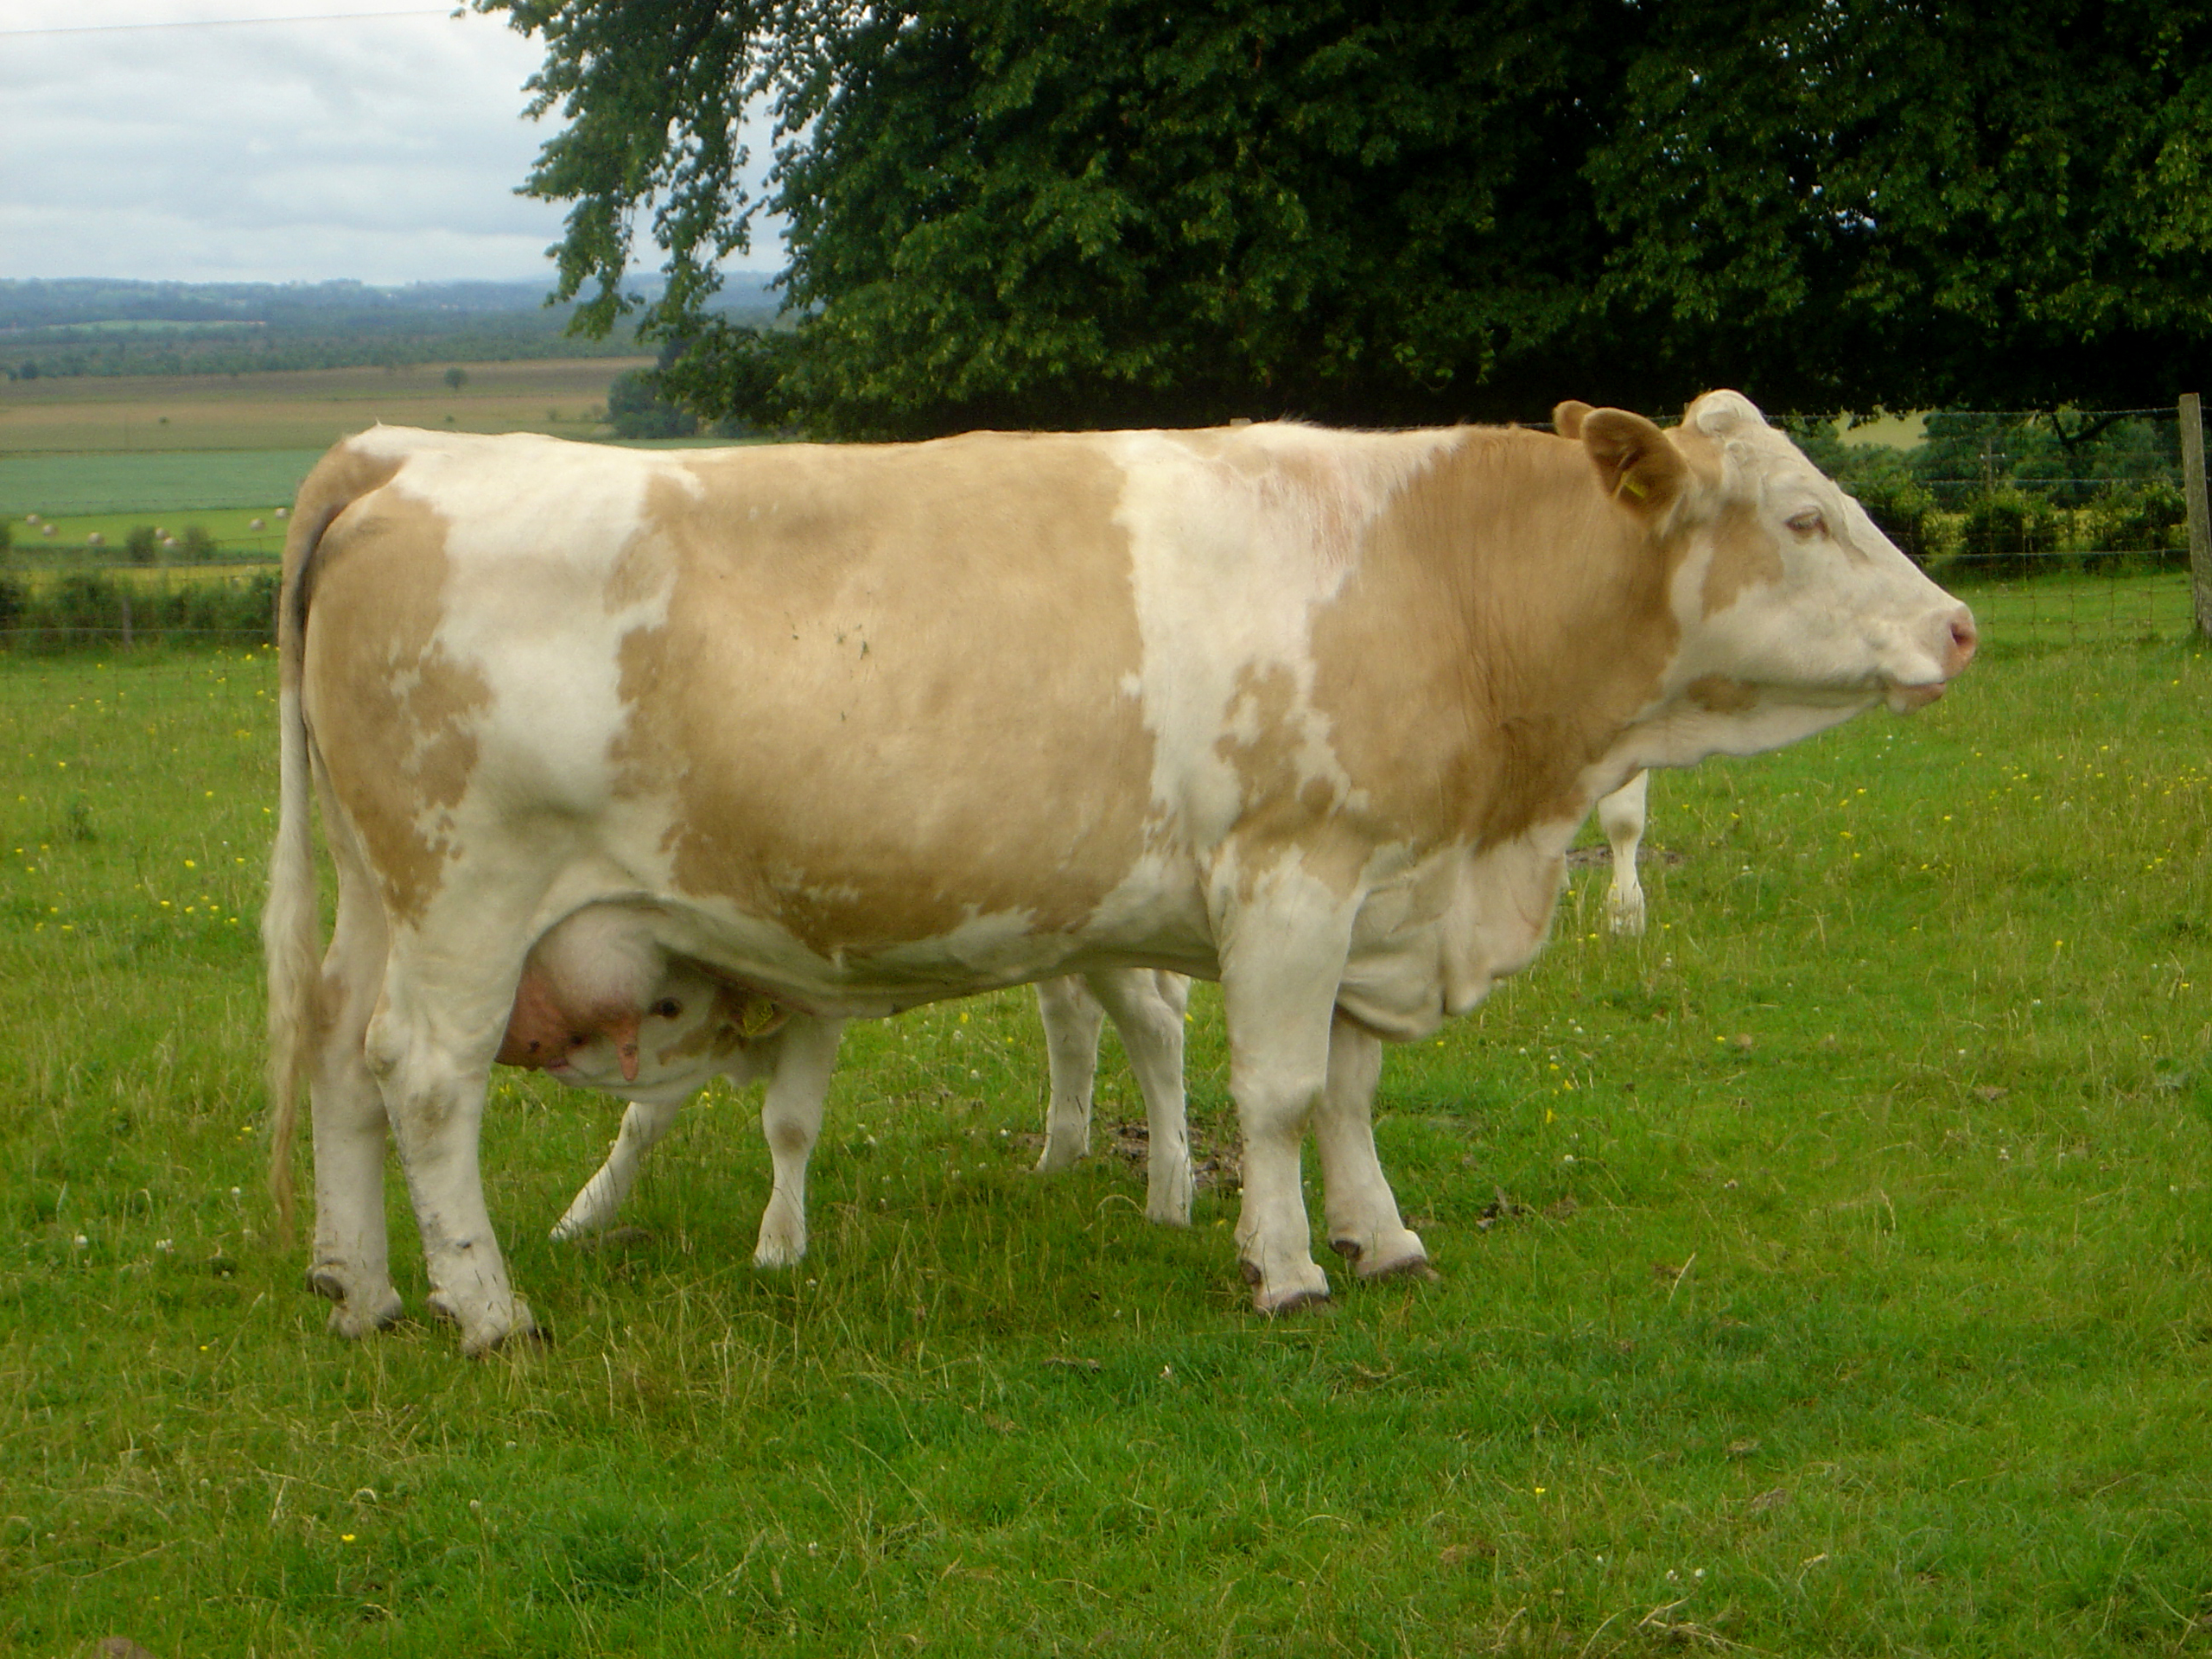 Cows Wallpaper